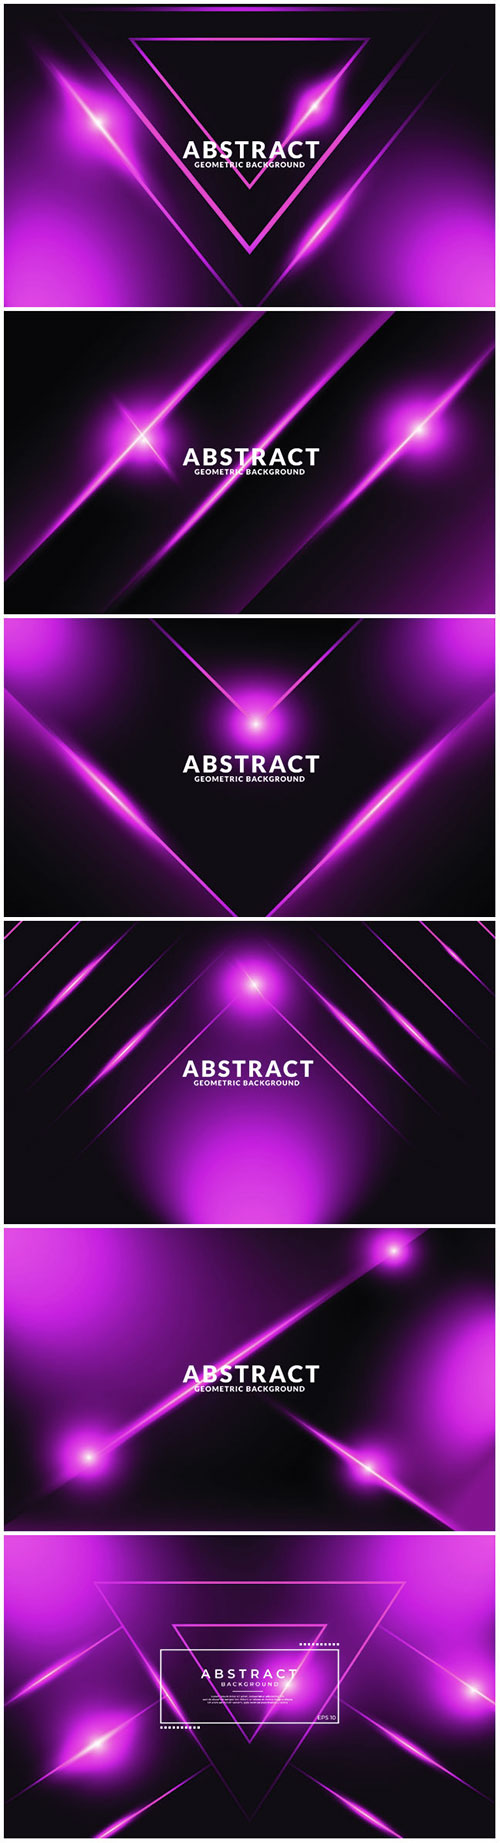 Dark purple realistic abstract geometric background, neon light effect